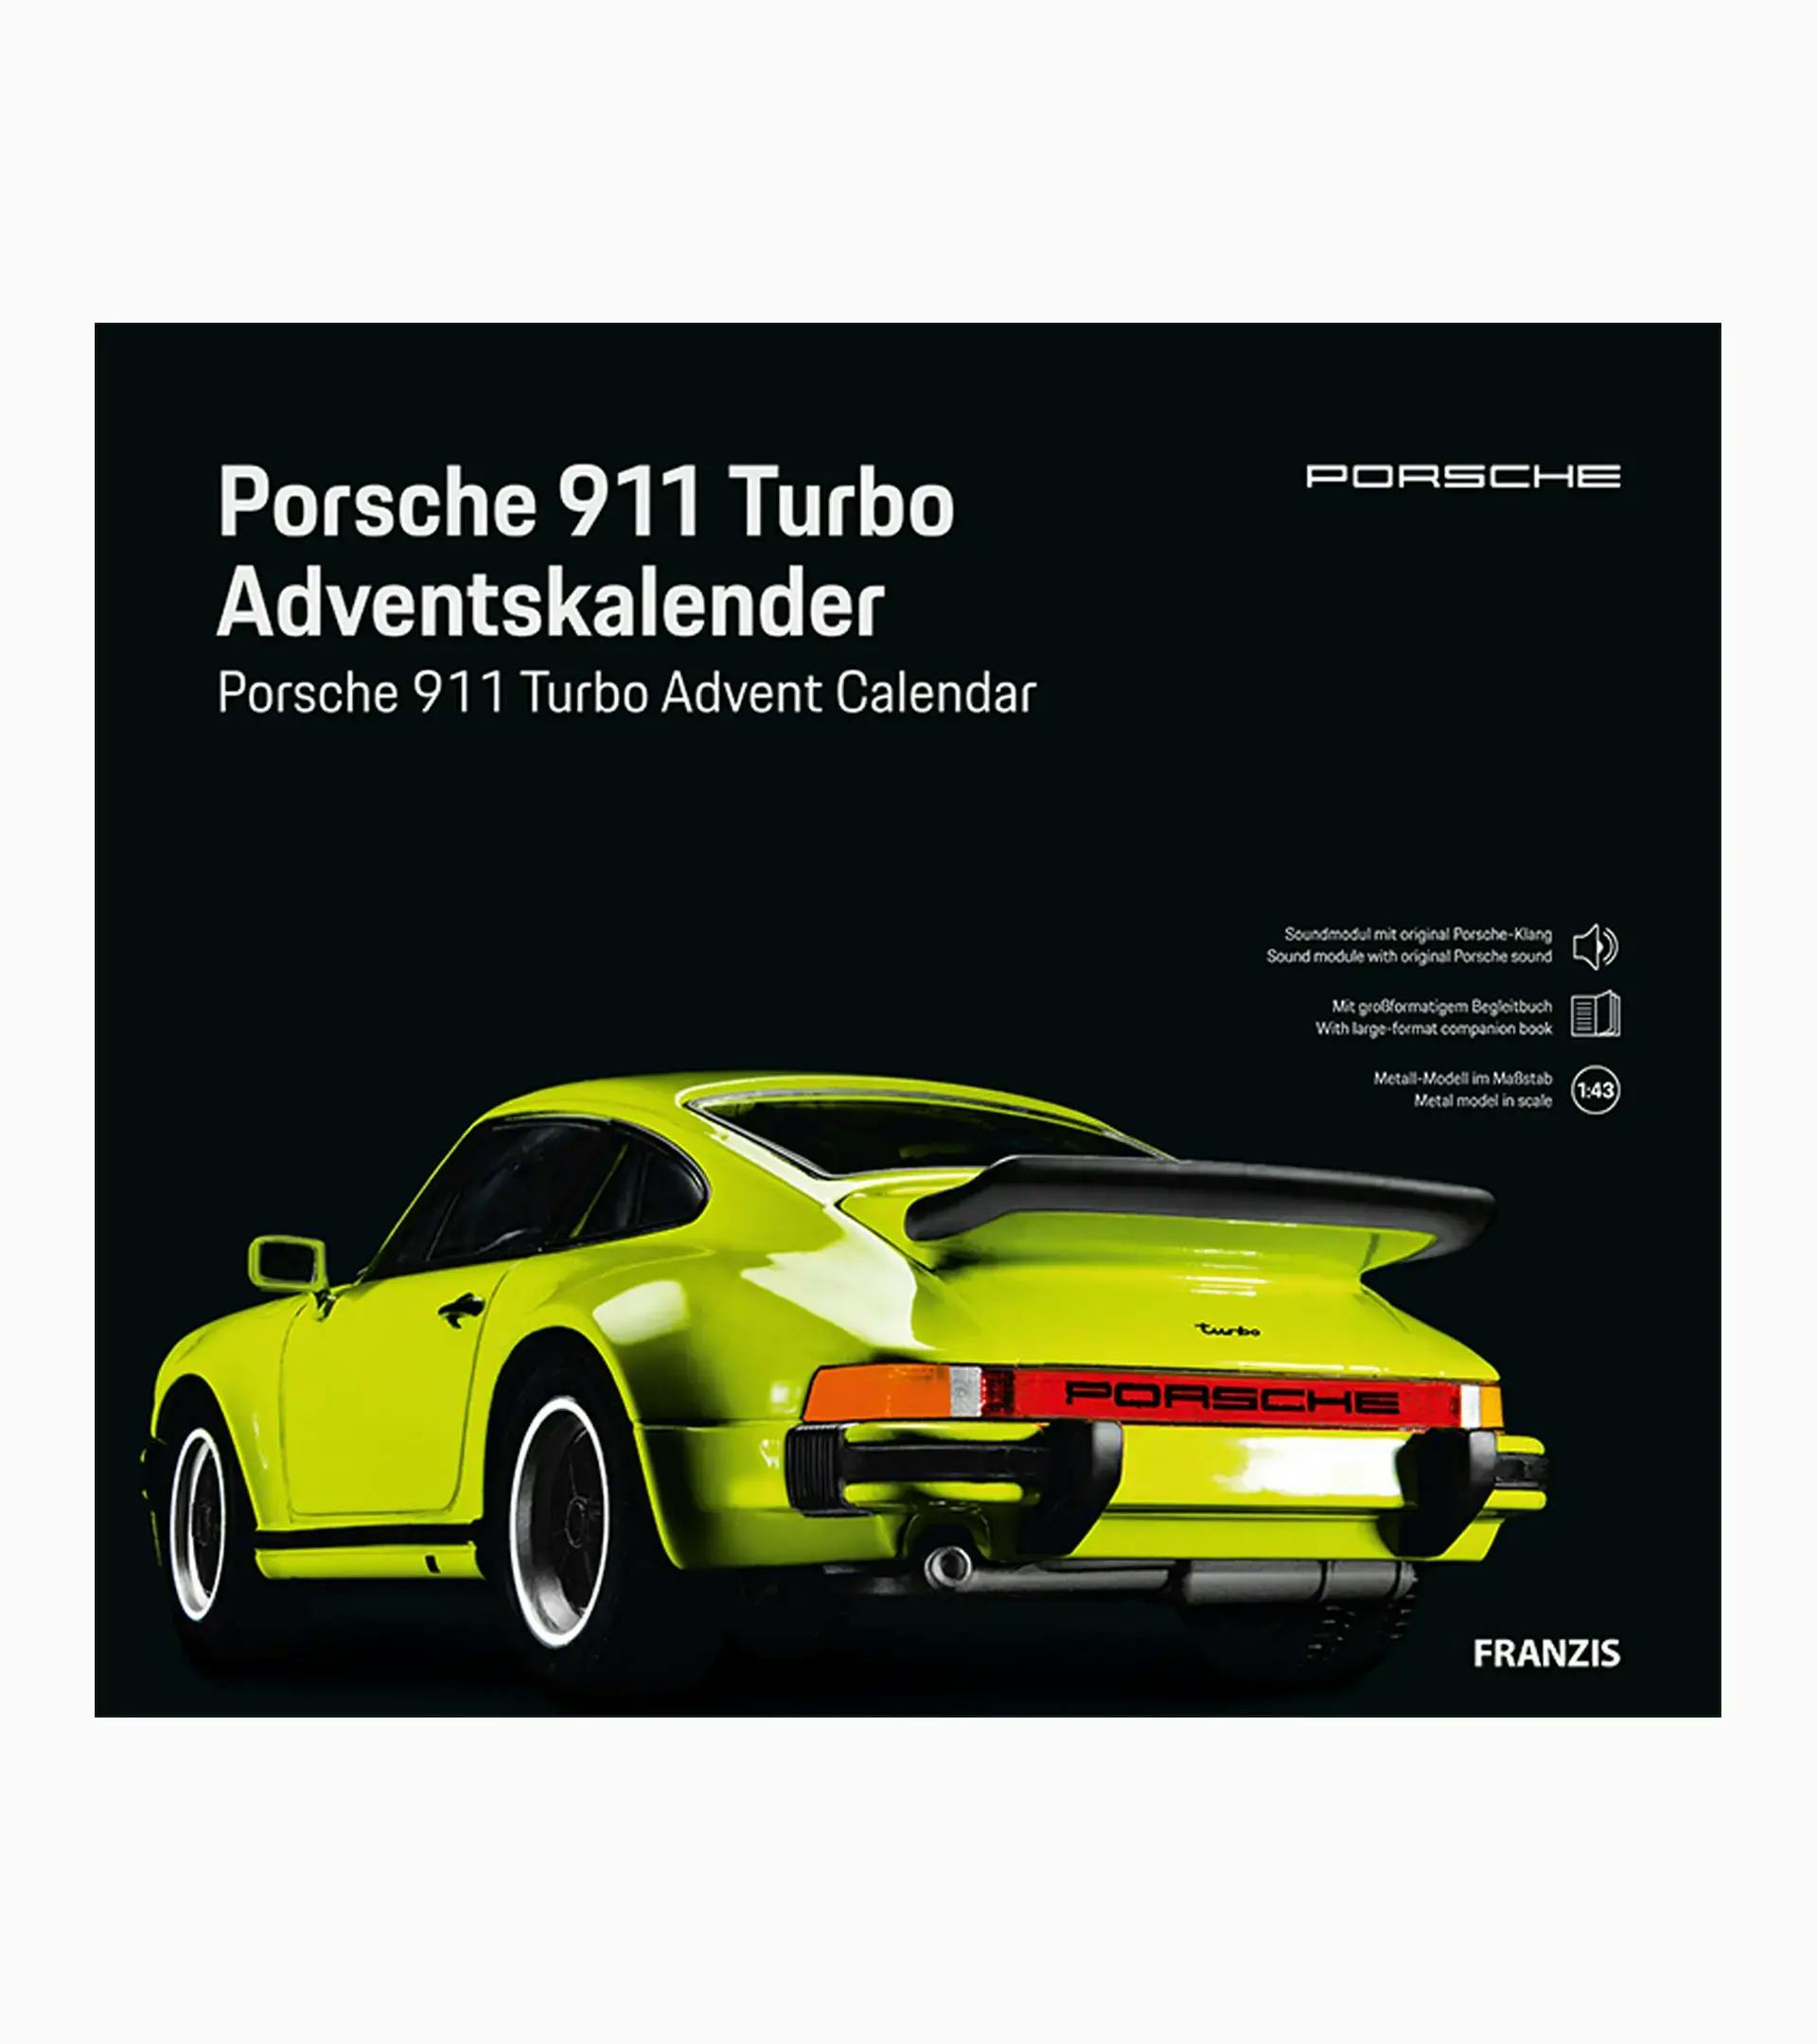 Calendario dell'avvento Porsche 911 Turbo 2